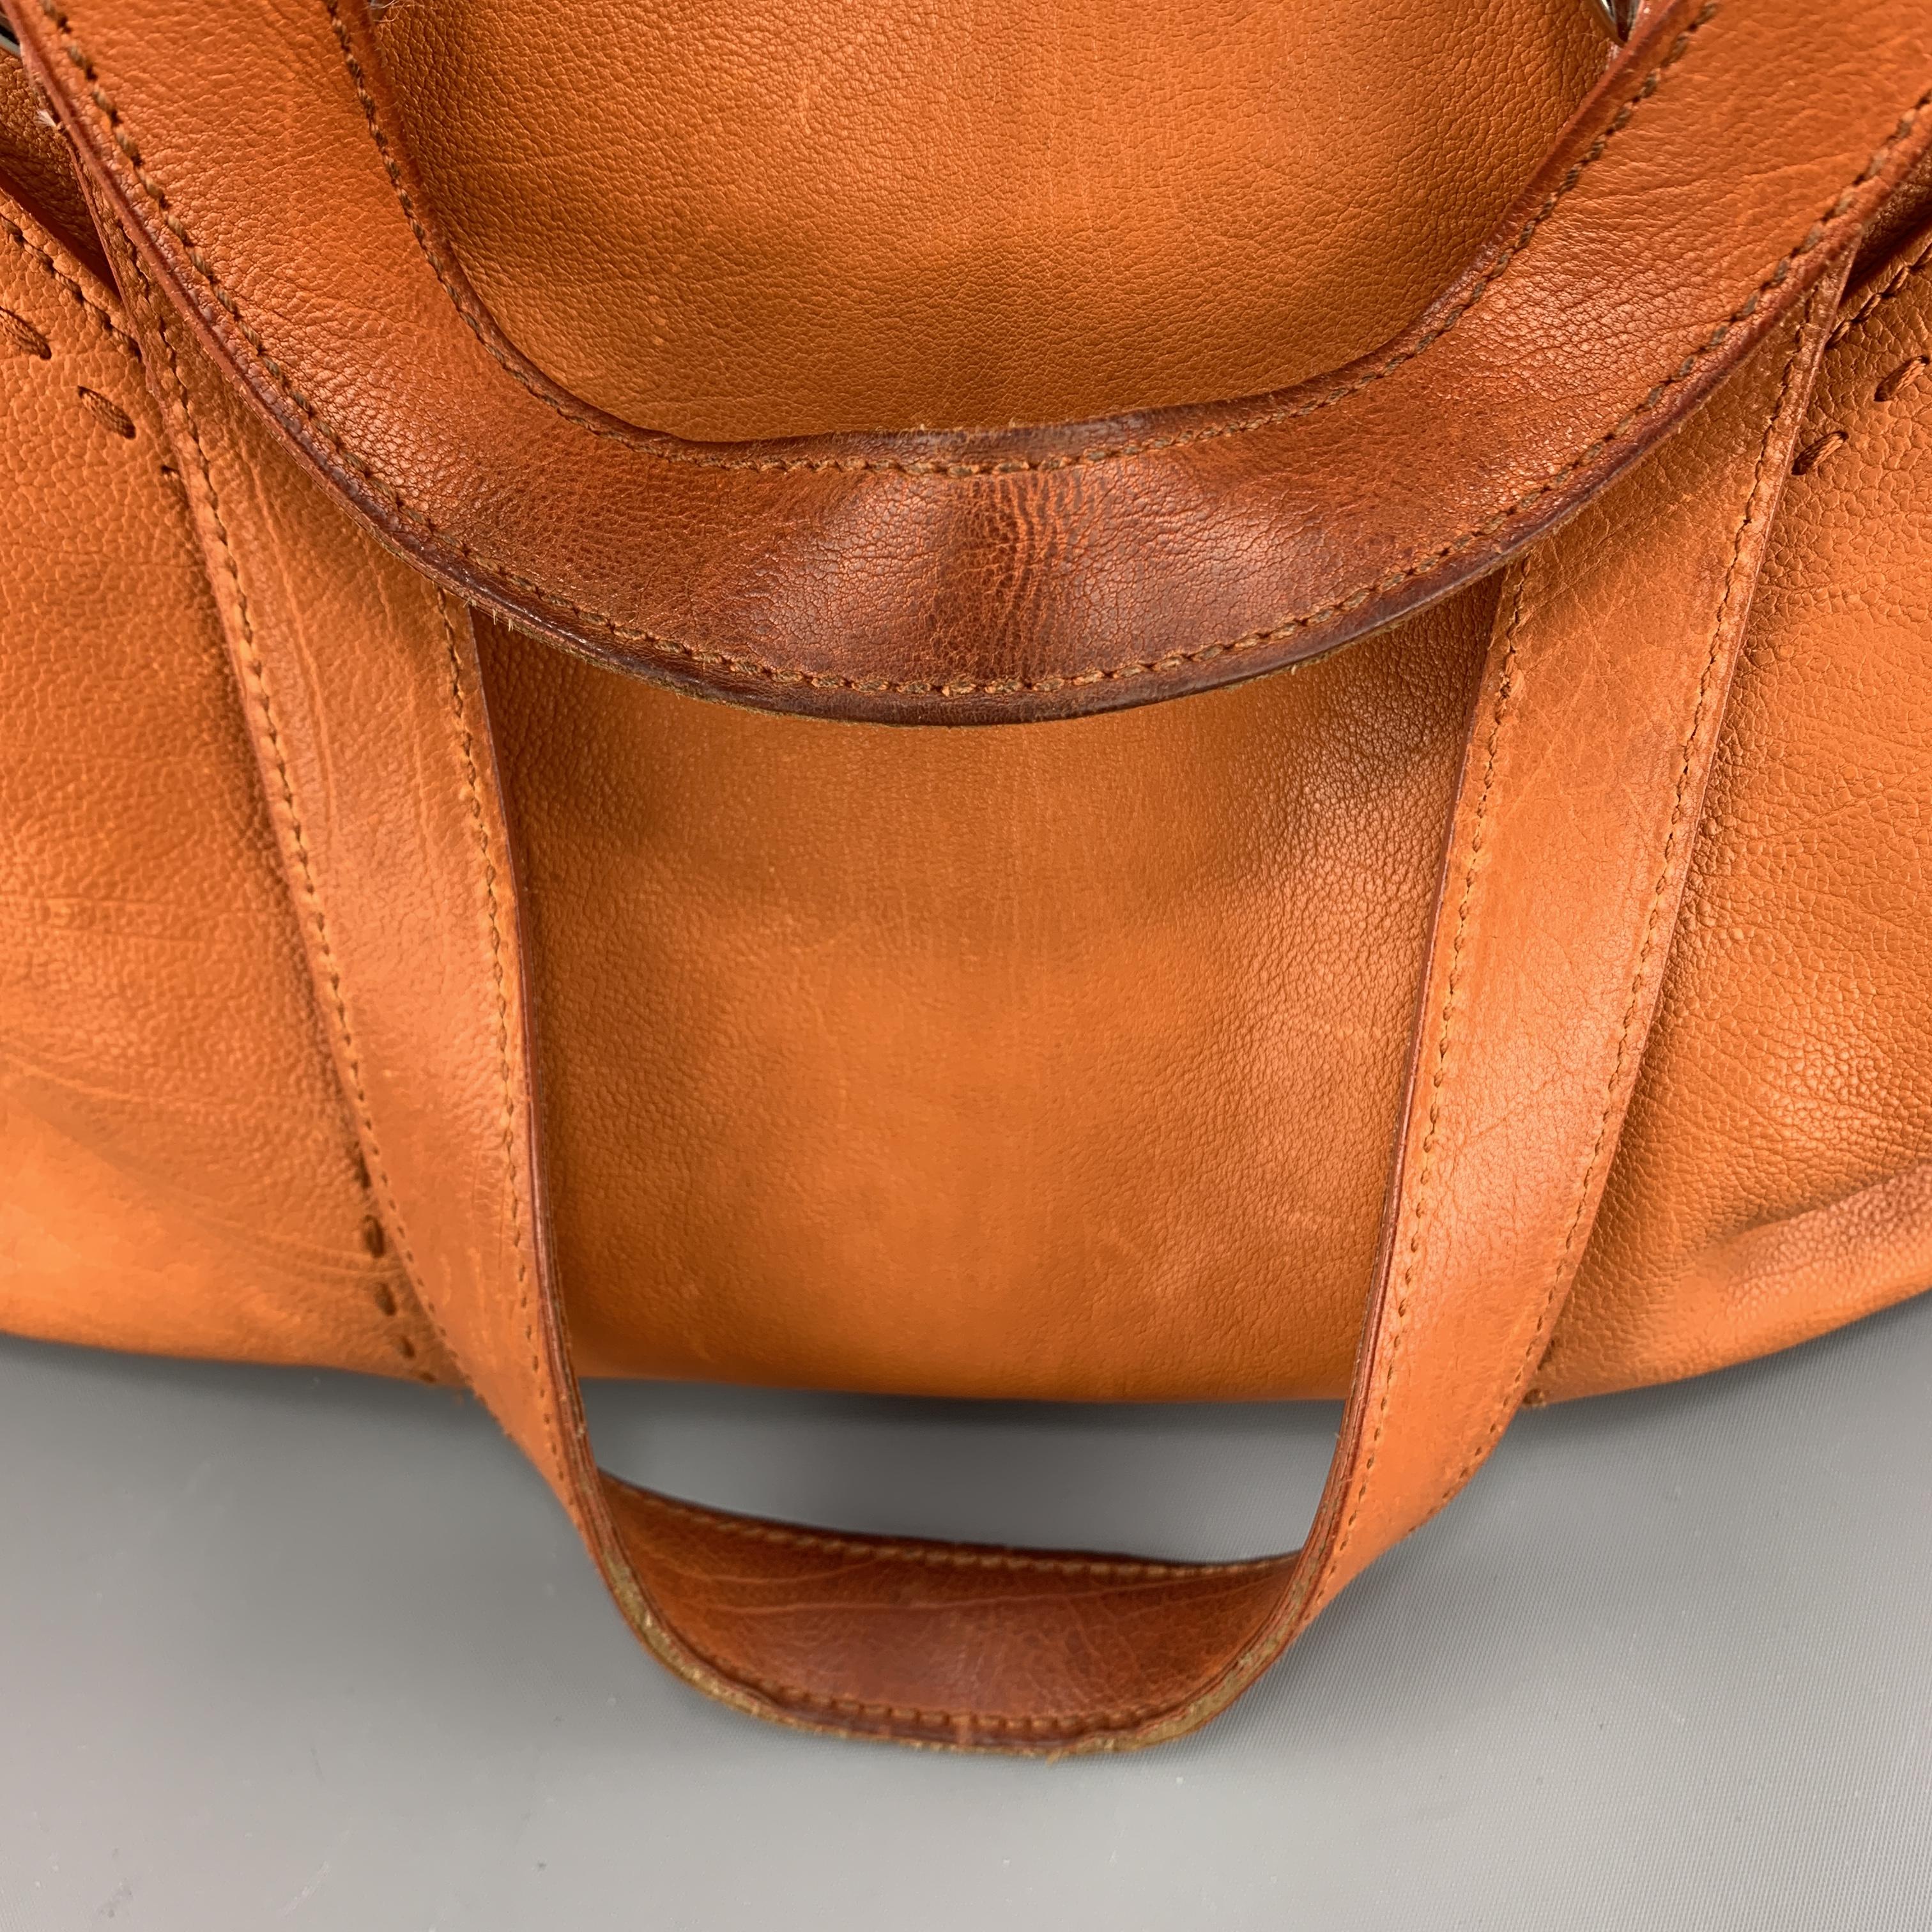 Women's YSL Solid Burnt Orange Leather MUSE Tote Handbag